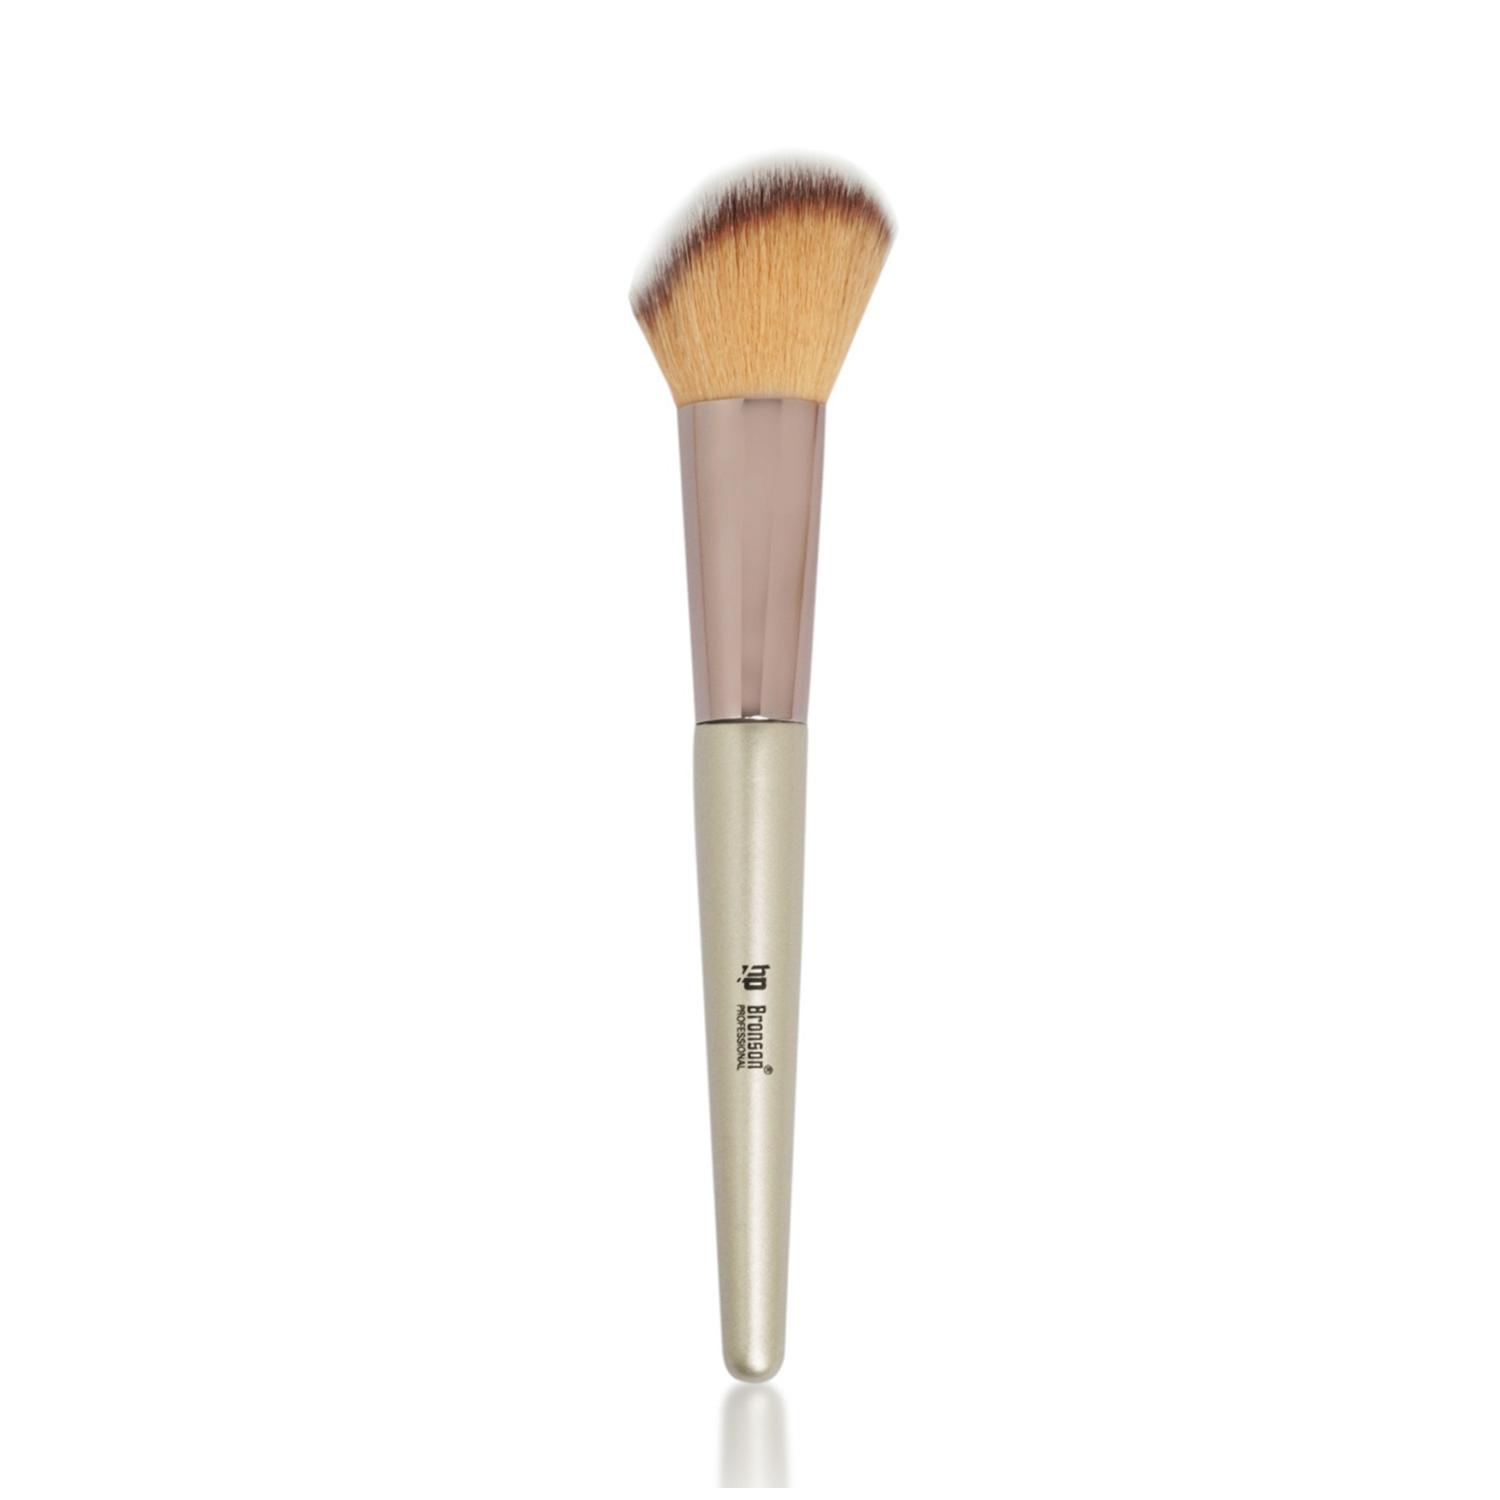 Bronson Professional | Bronson Professional Classic Fat Blush Contour Makeup Brush - Silver, Pink